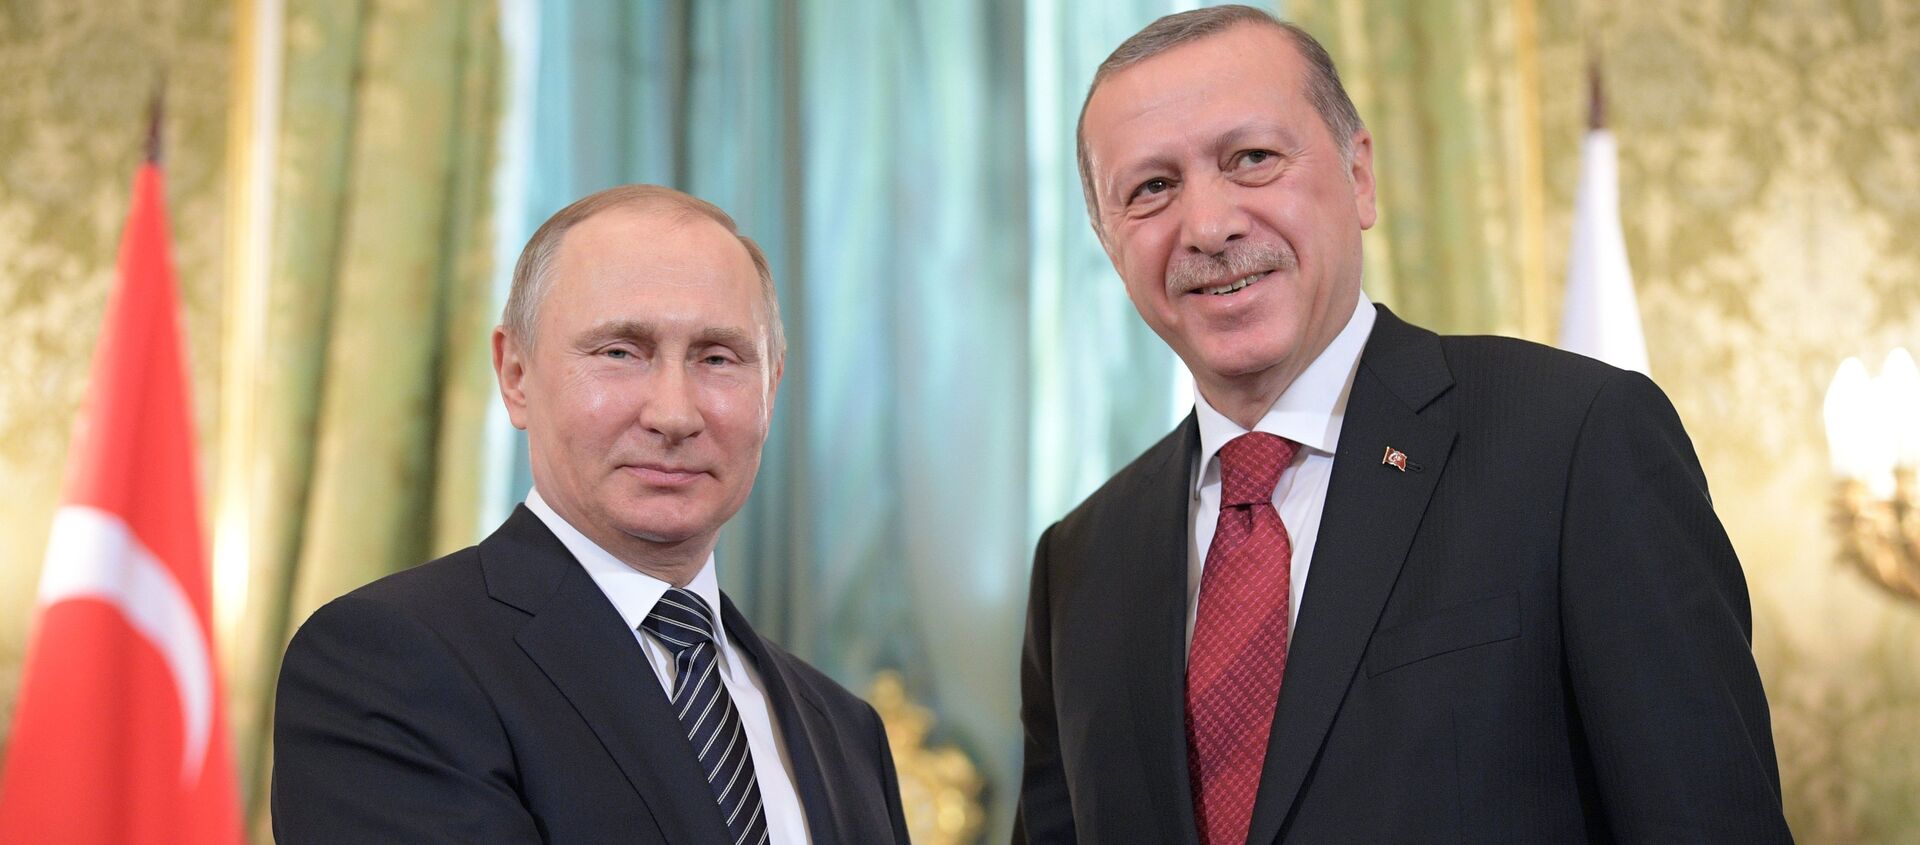 Президент РФ Владимир Путин и президент Турции Реджеп Тайип Эрдоган - Sputnik Грузия, 1920, 17.08.2020